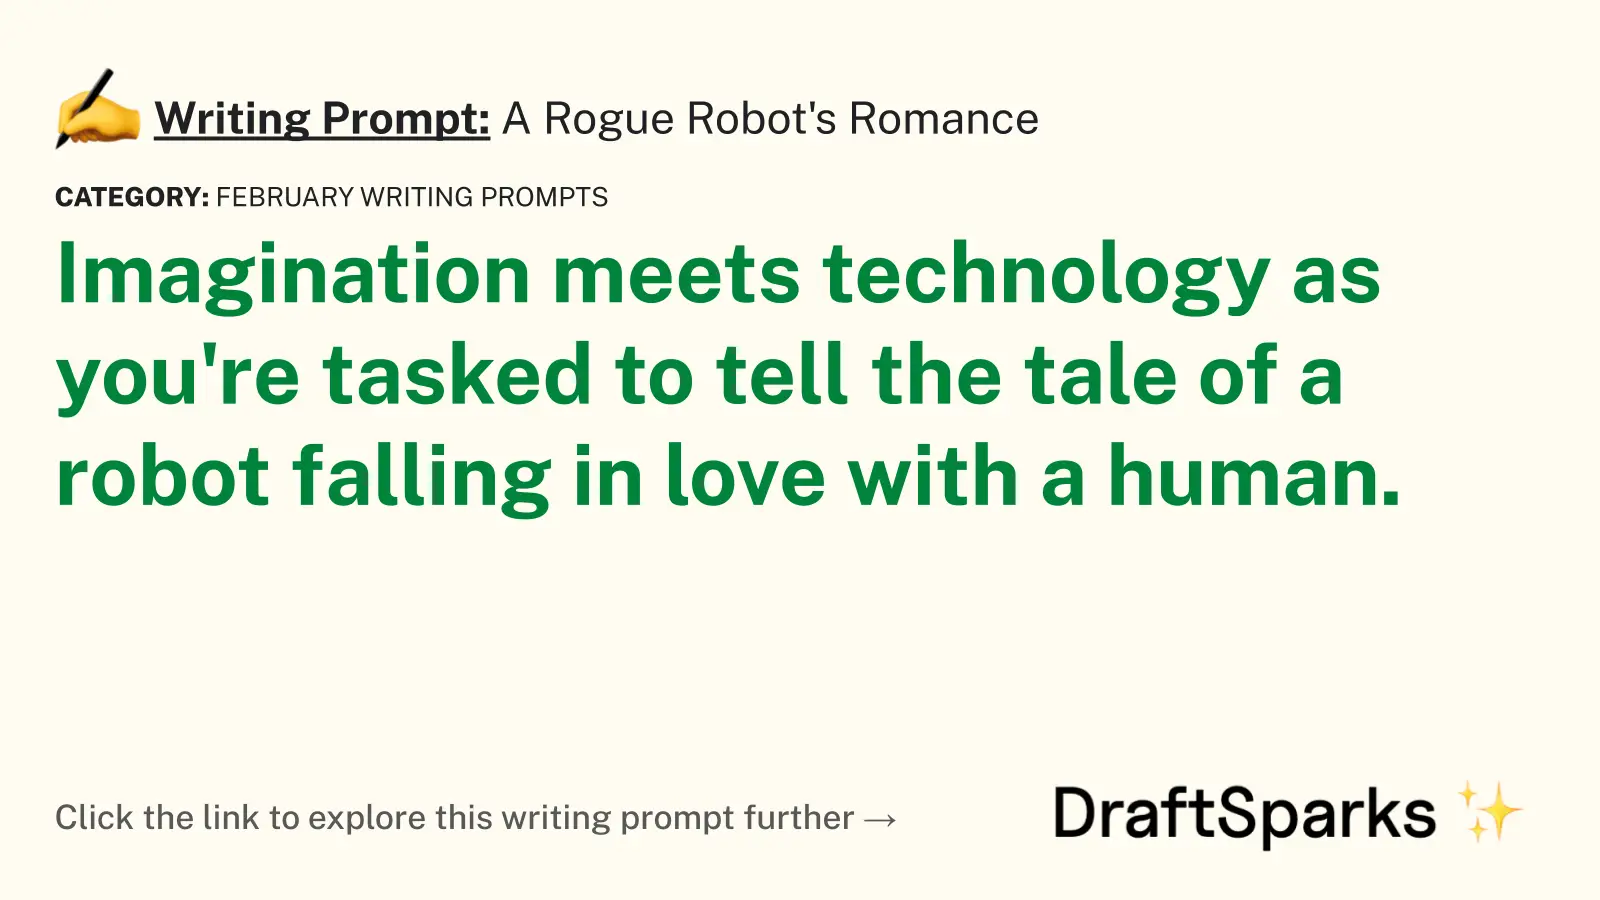 A Rogue Robot’s Romance